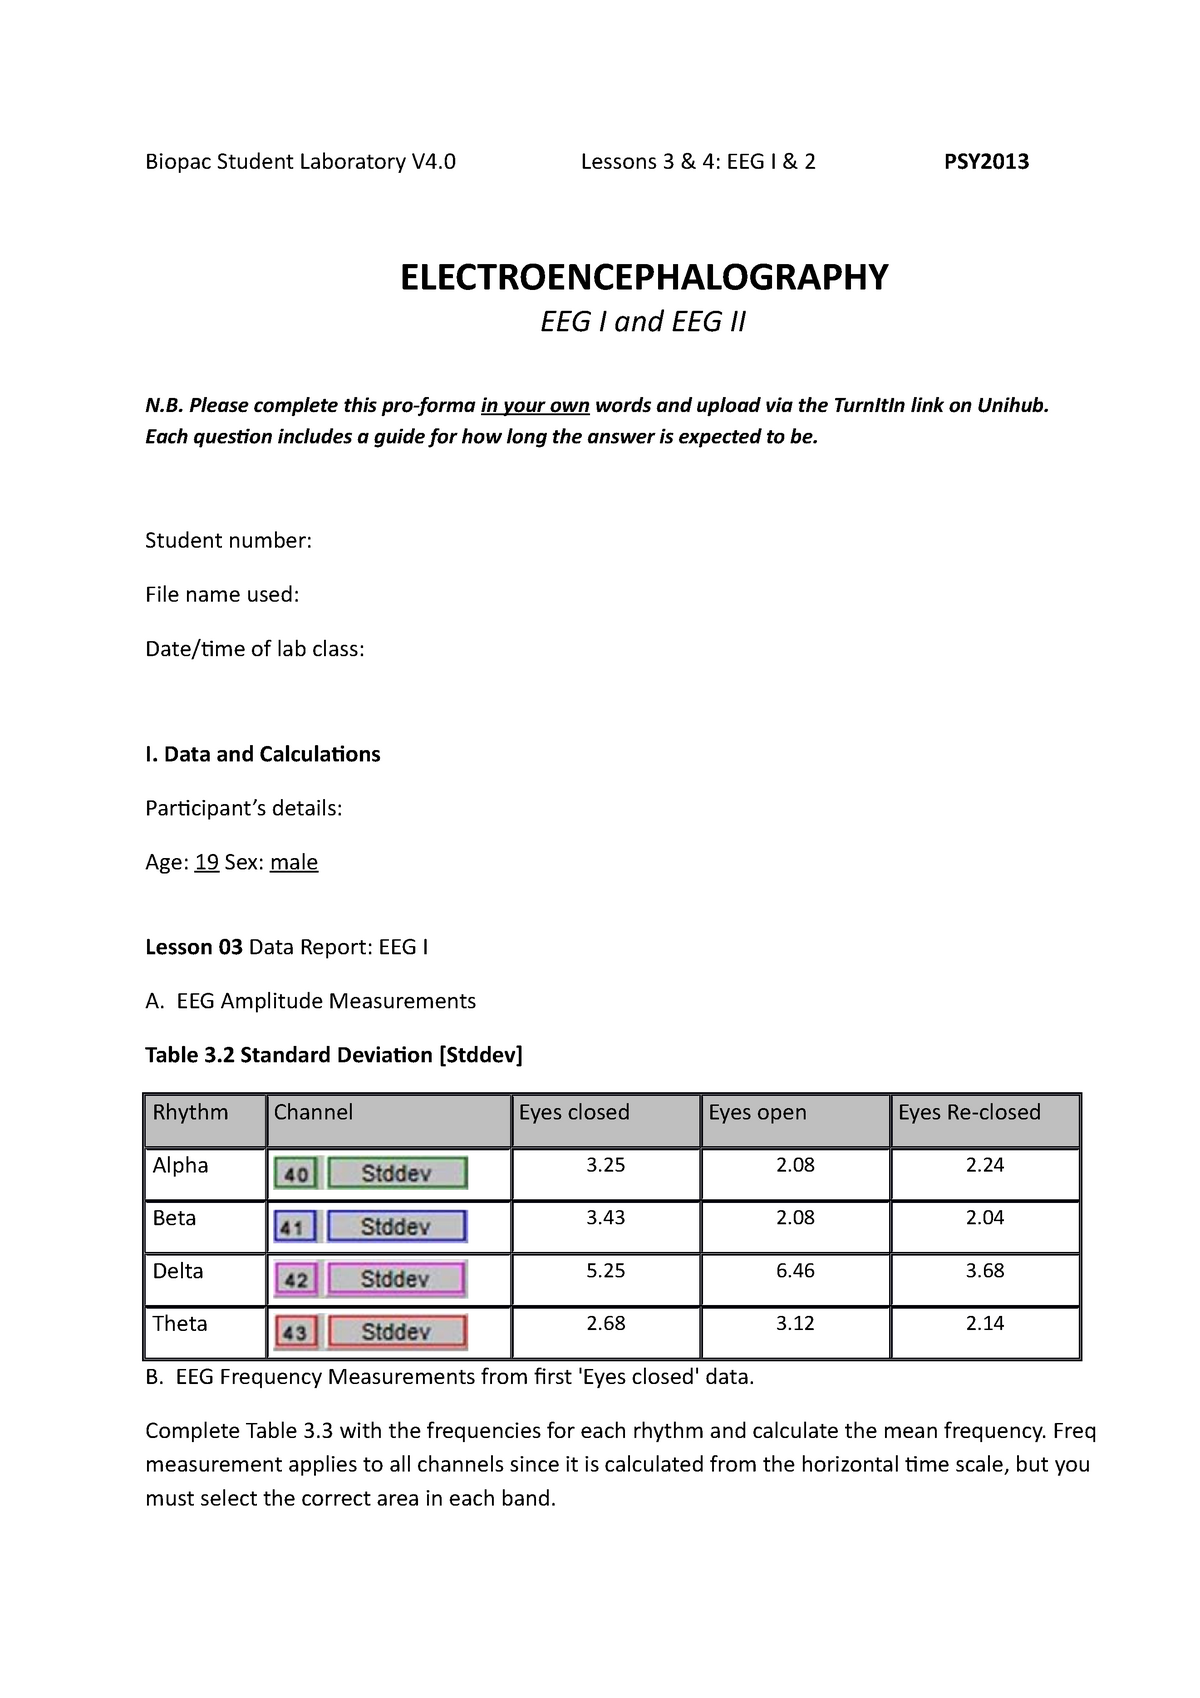 EEG lab data report Biopac Student Laboratory V4 Lessons 3 & 4 EEG I